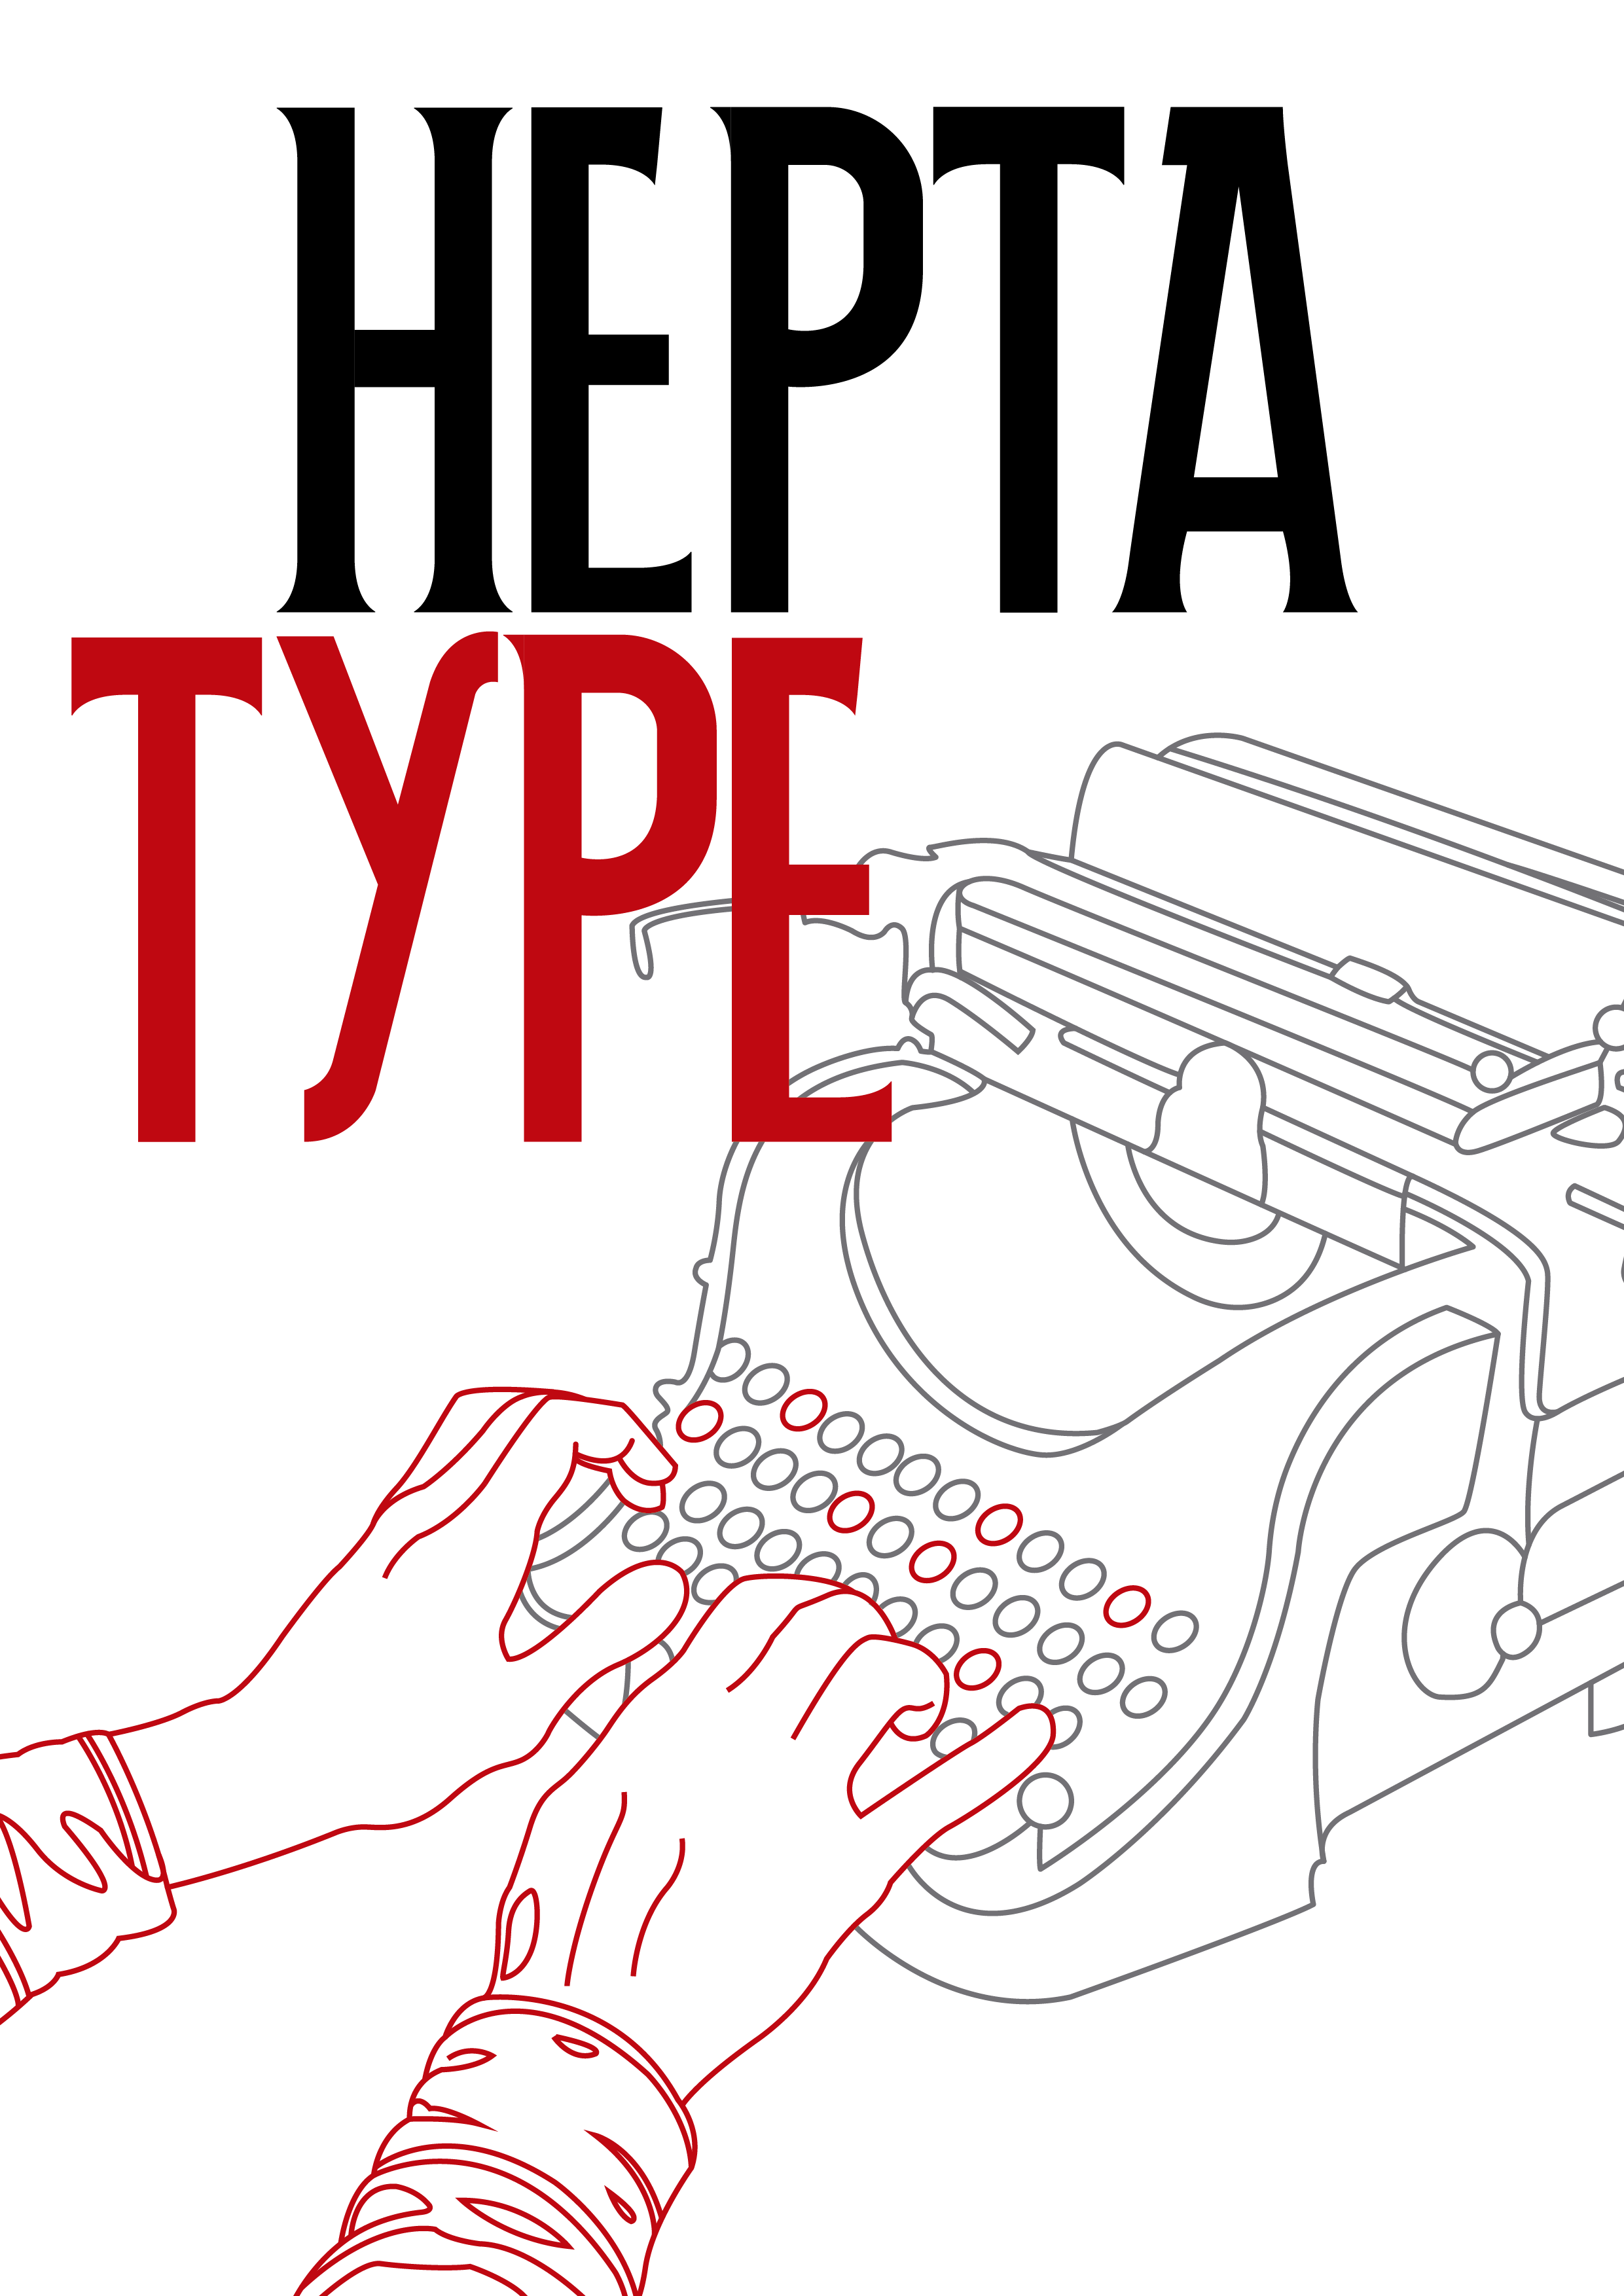 Hepta Type by Sandra Martínez Cagigal - Creative Work